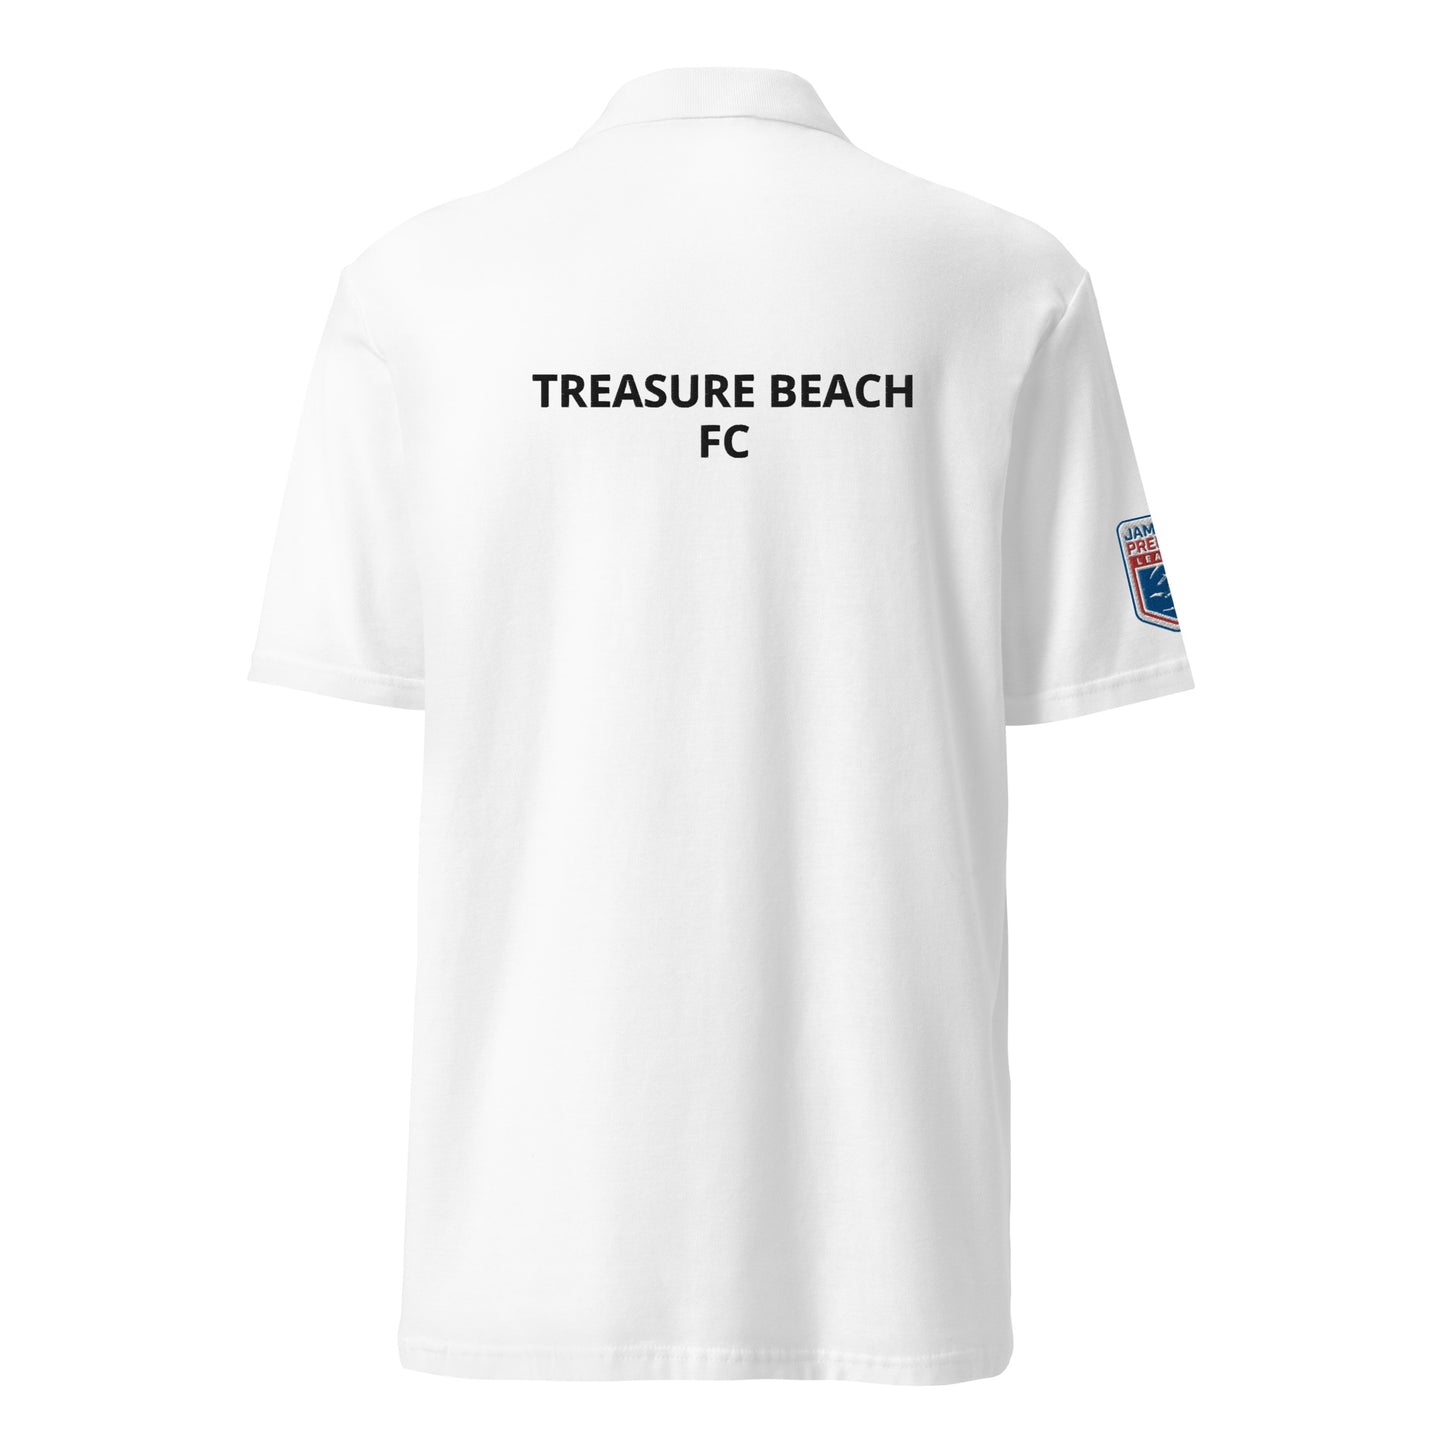 Treasure Beach FC Unisex Pique Polo Shirt with Club Name on Back